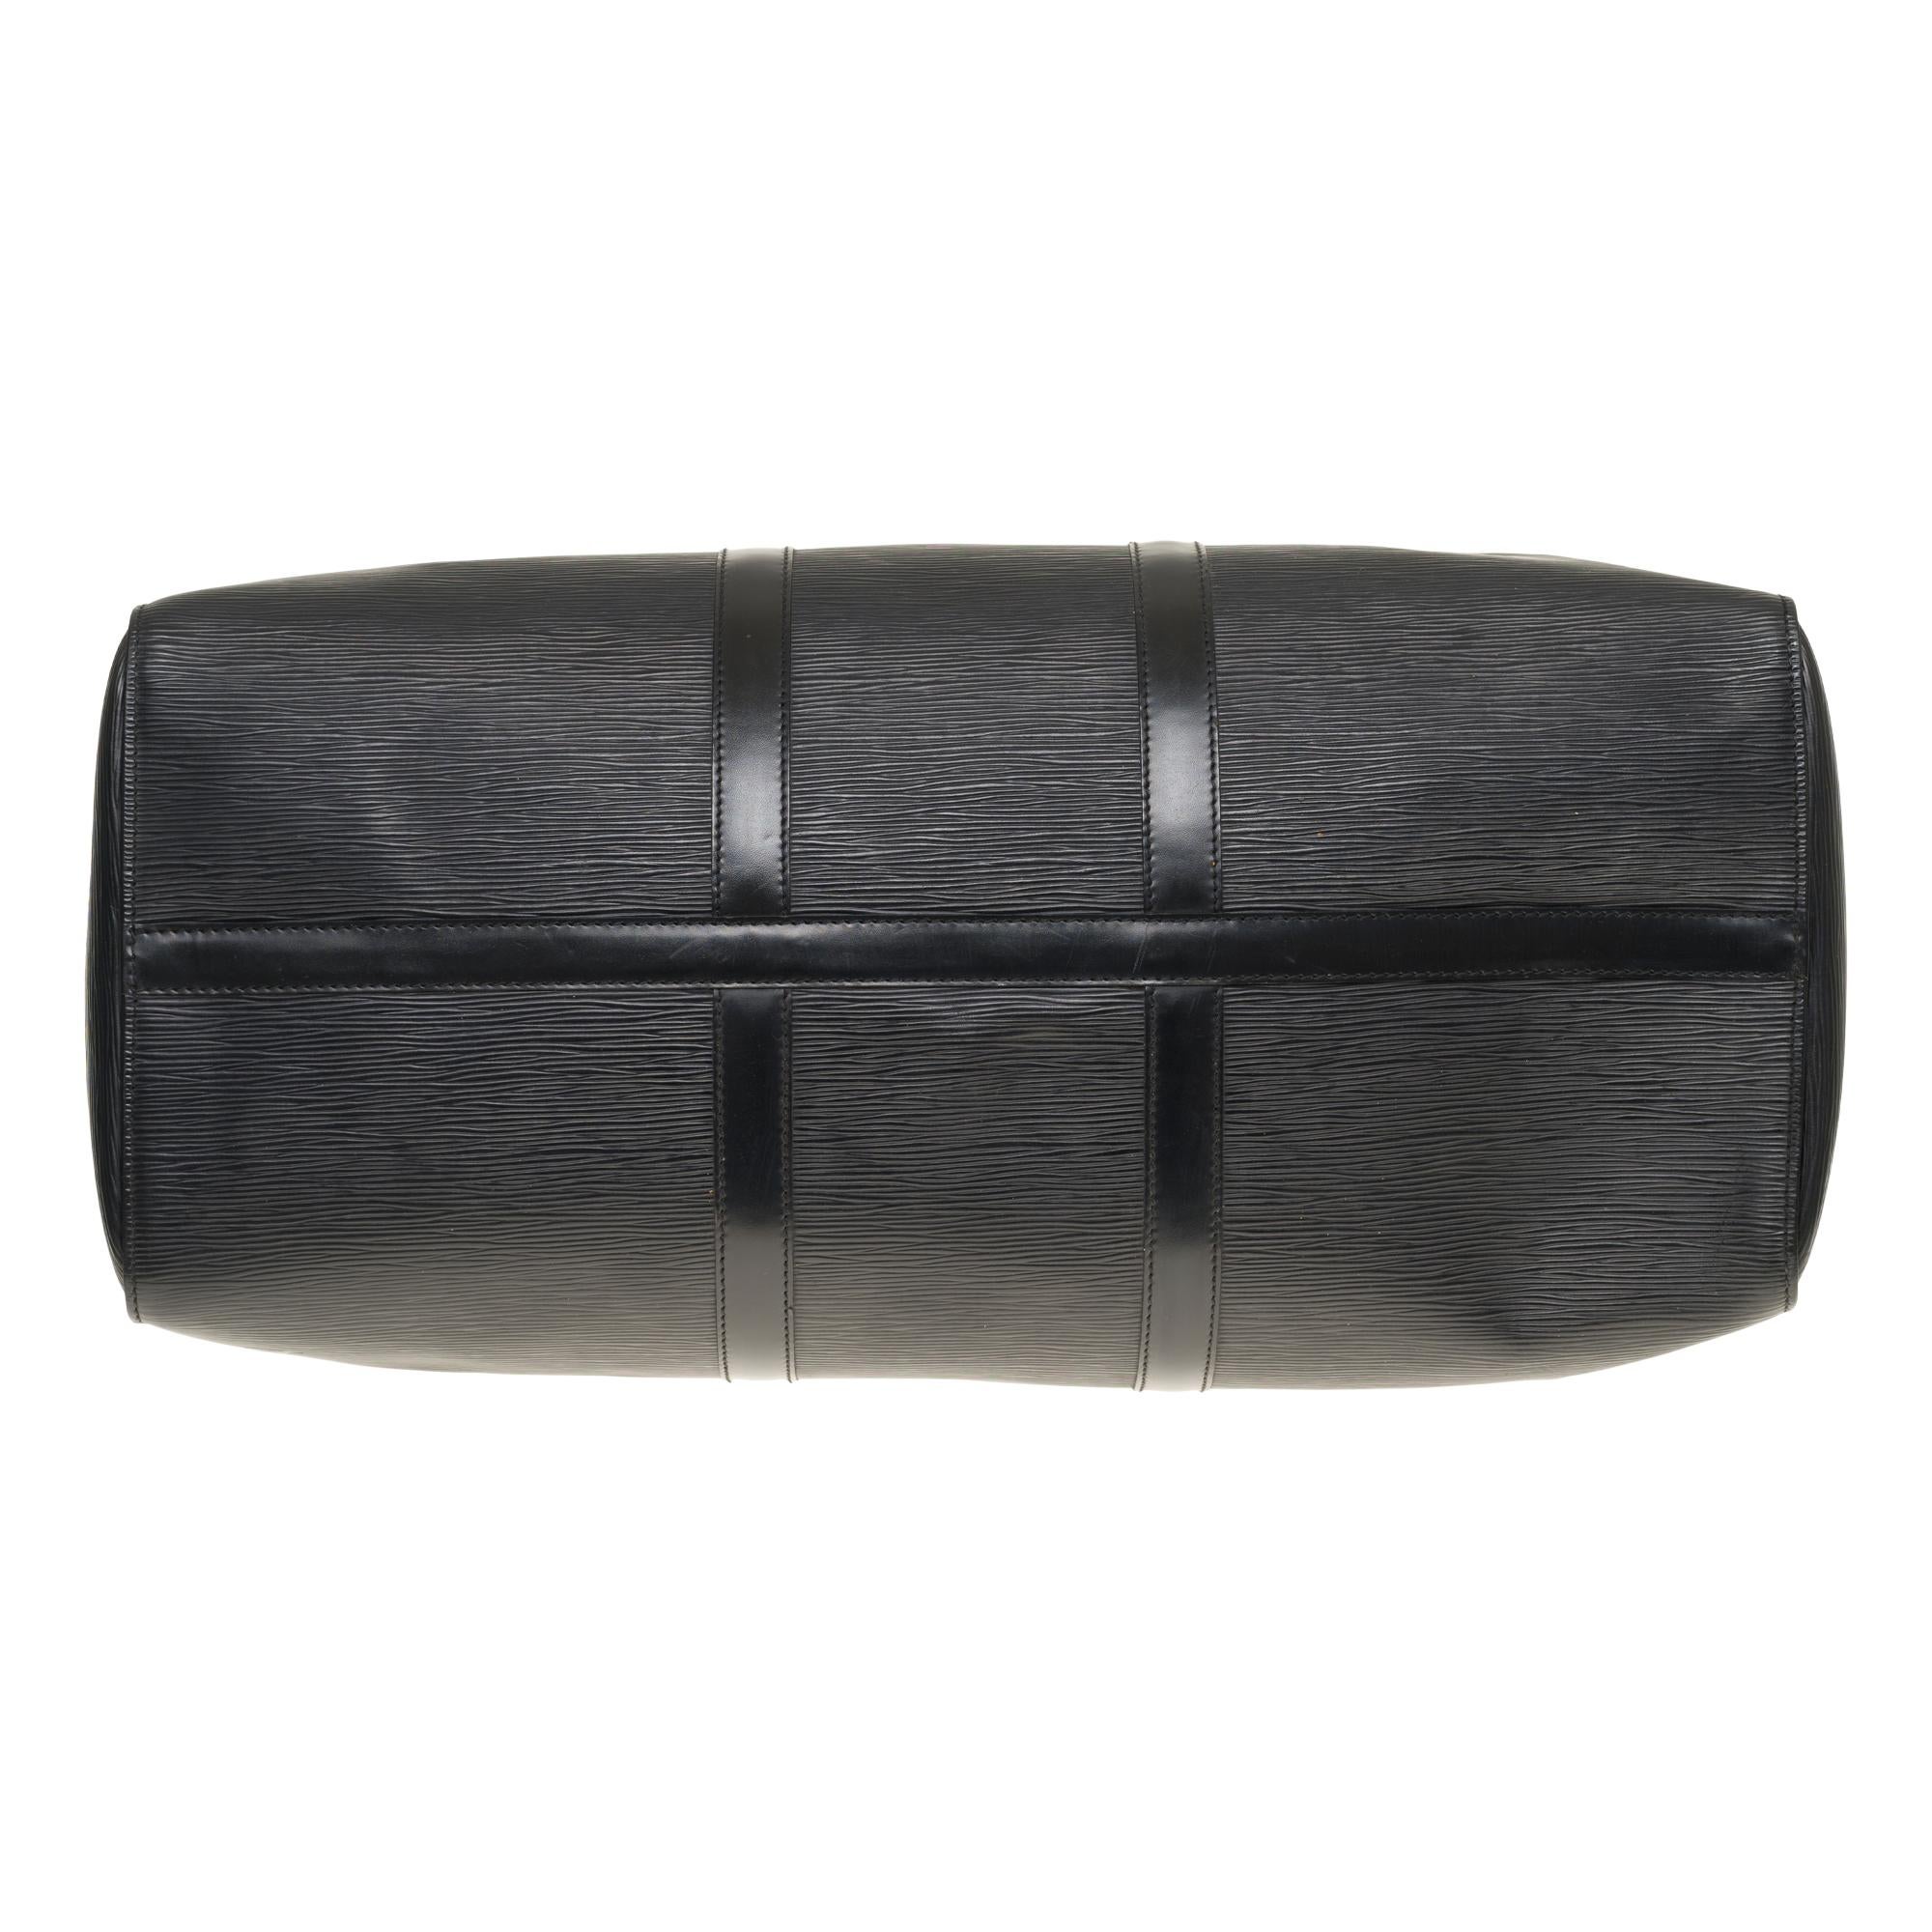 Louis Vuitton Keepall 50 Travel bag in black épi leather 1